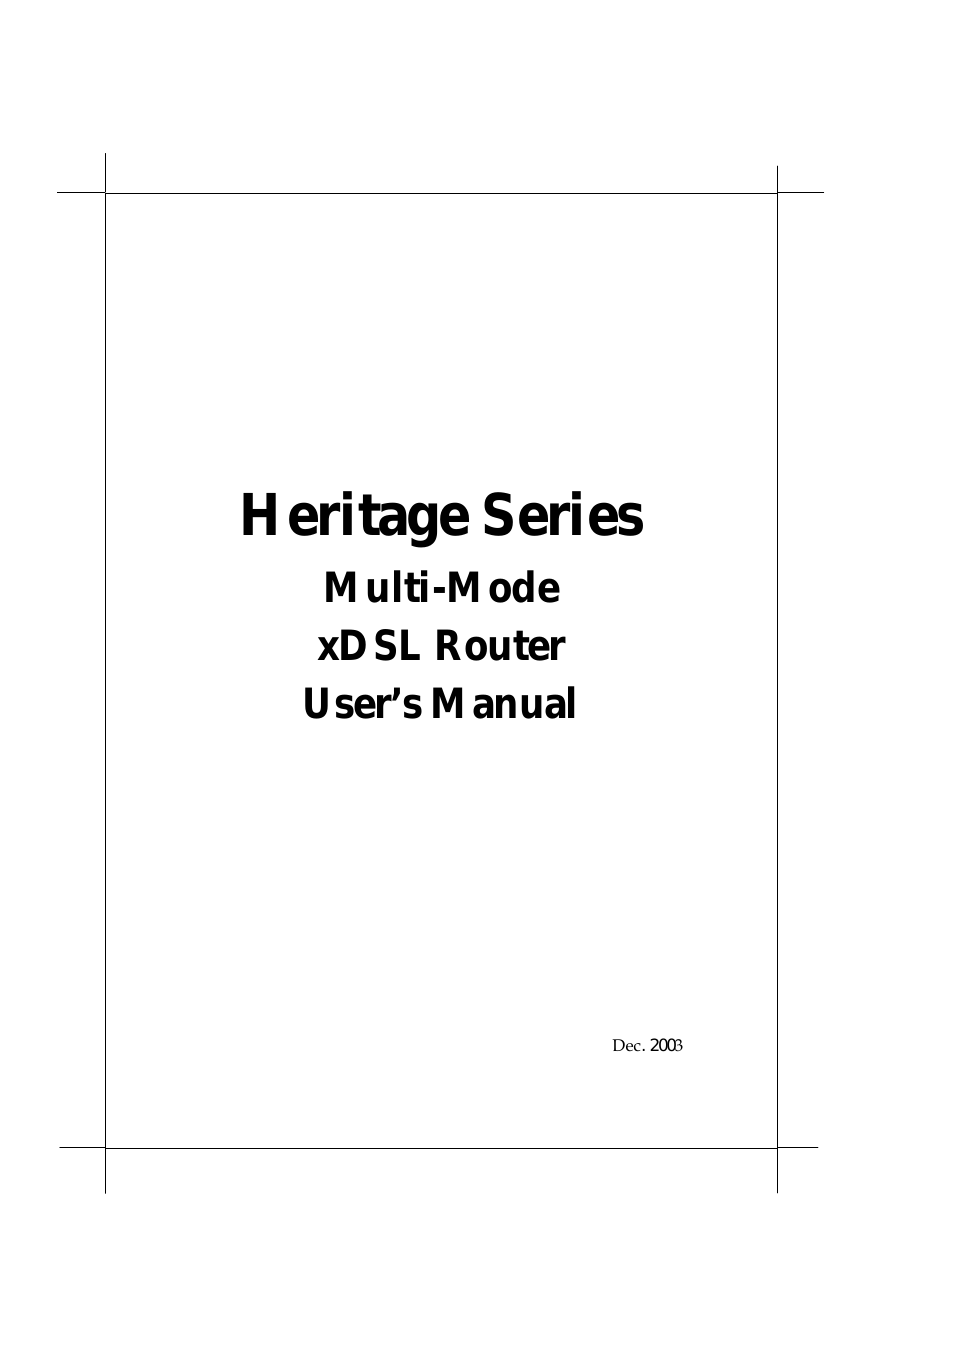 ADSL Bridge/ Router Heritage